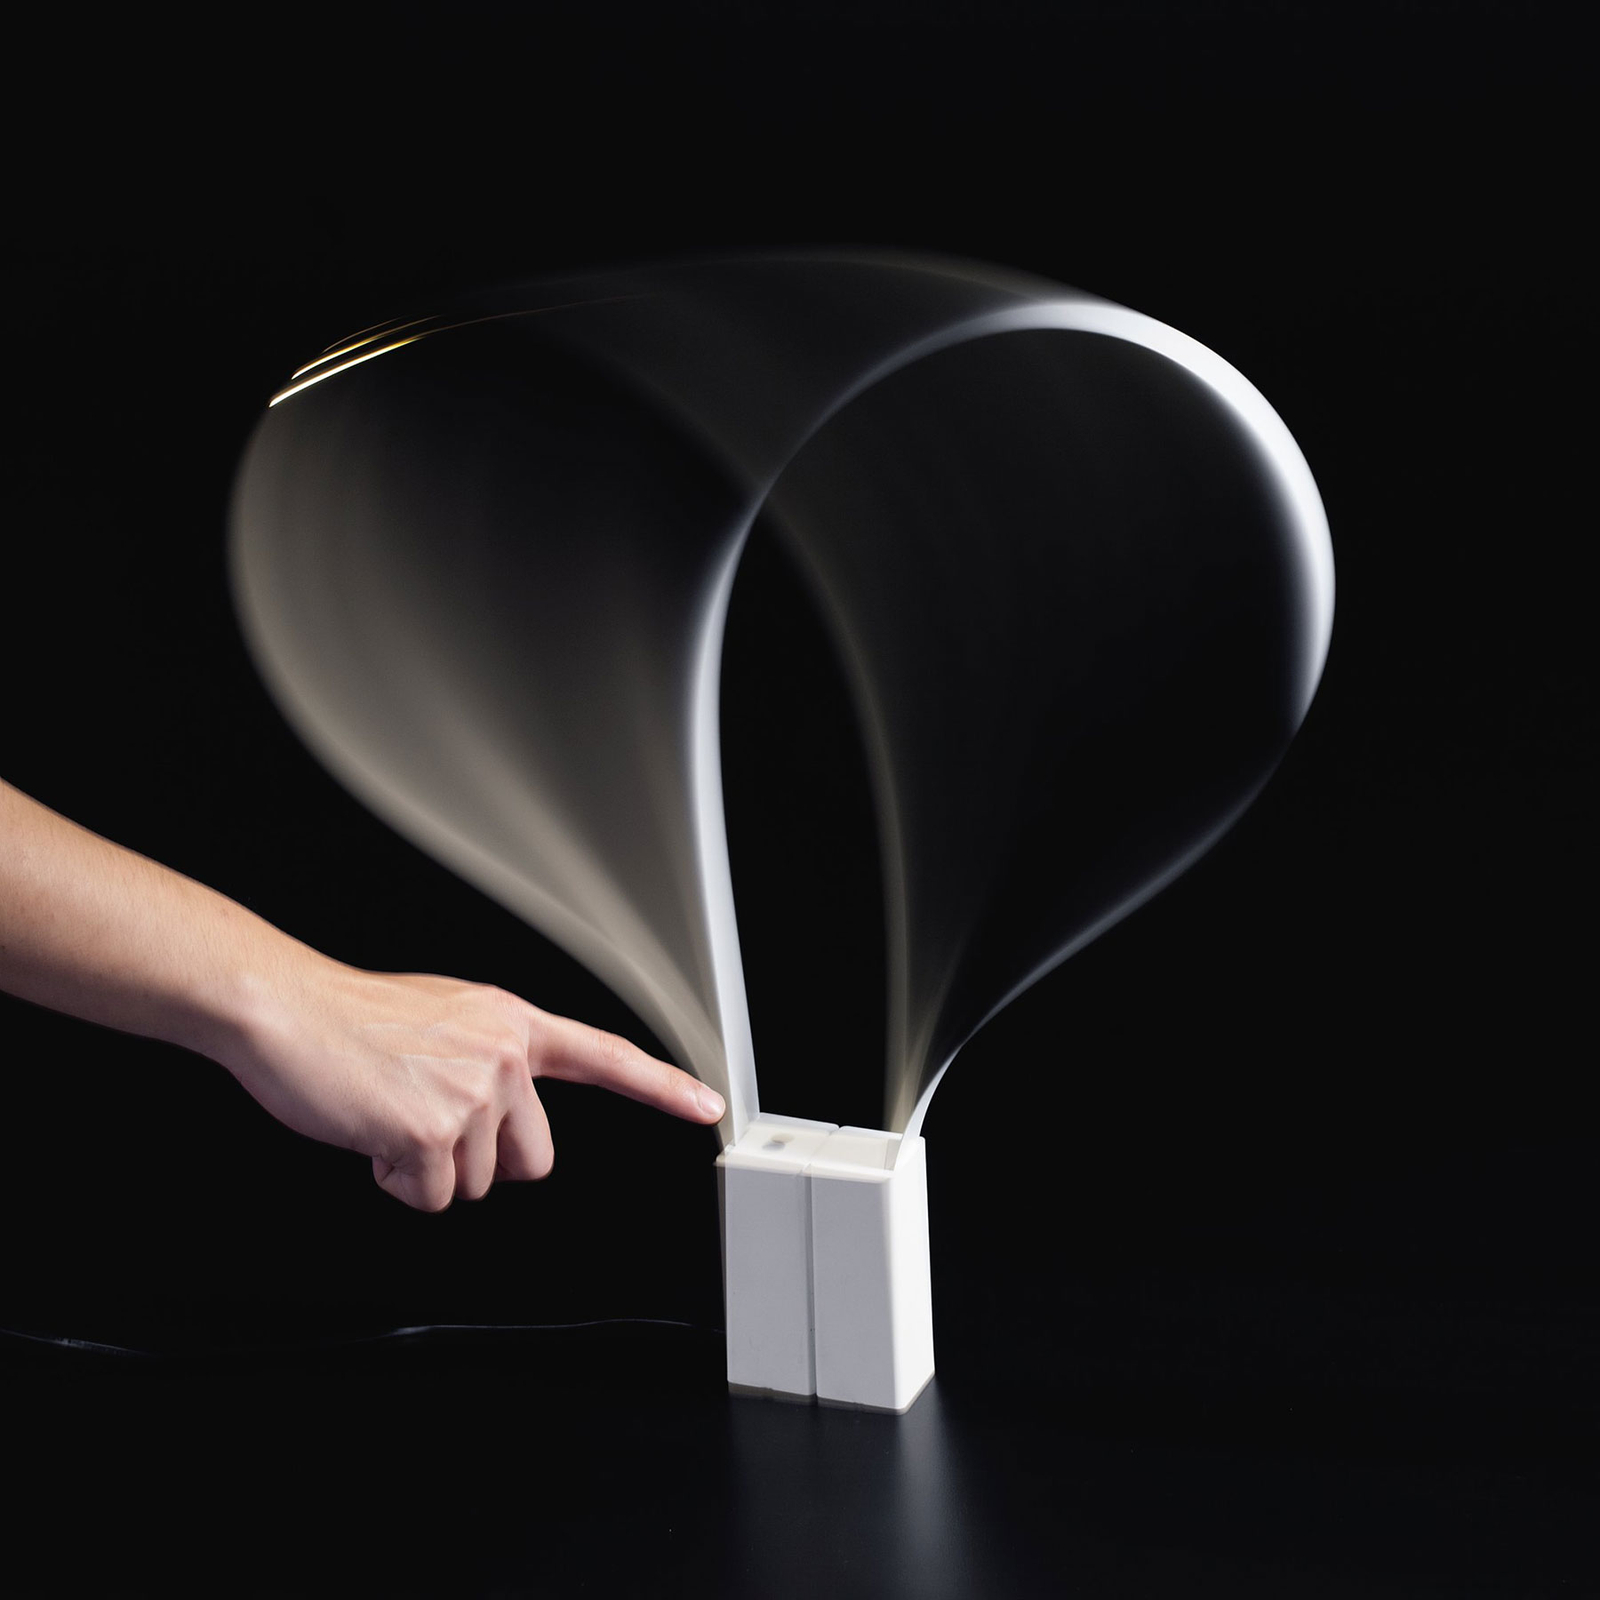 Martinelli Luce Fluida LED table lamp, flexible